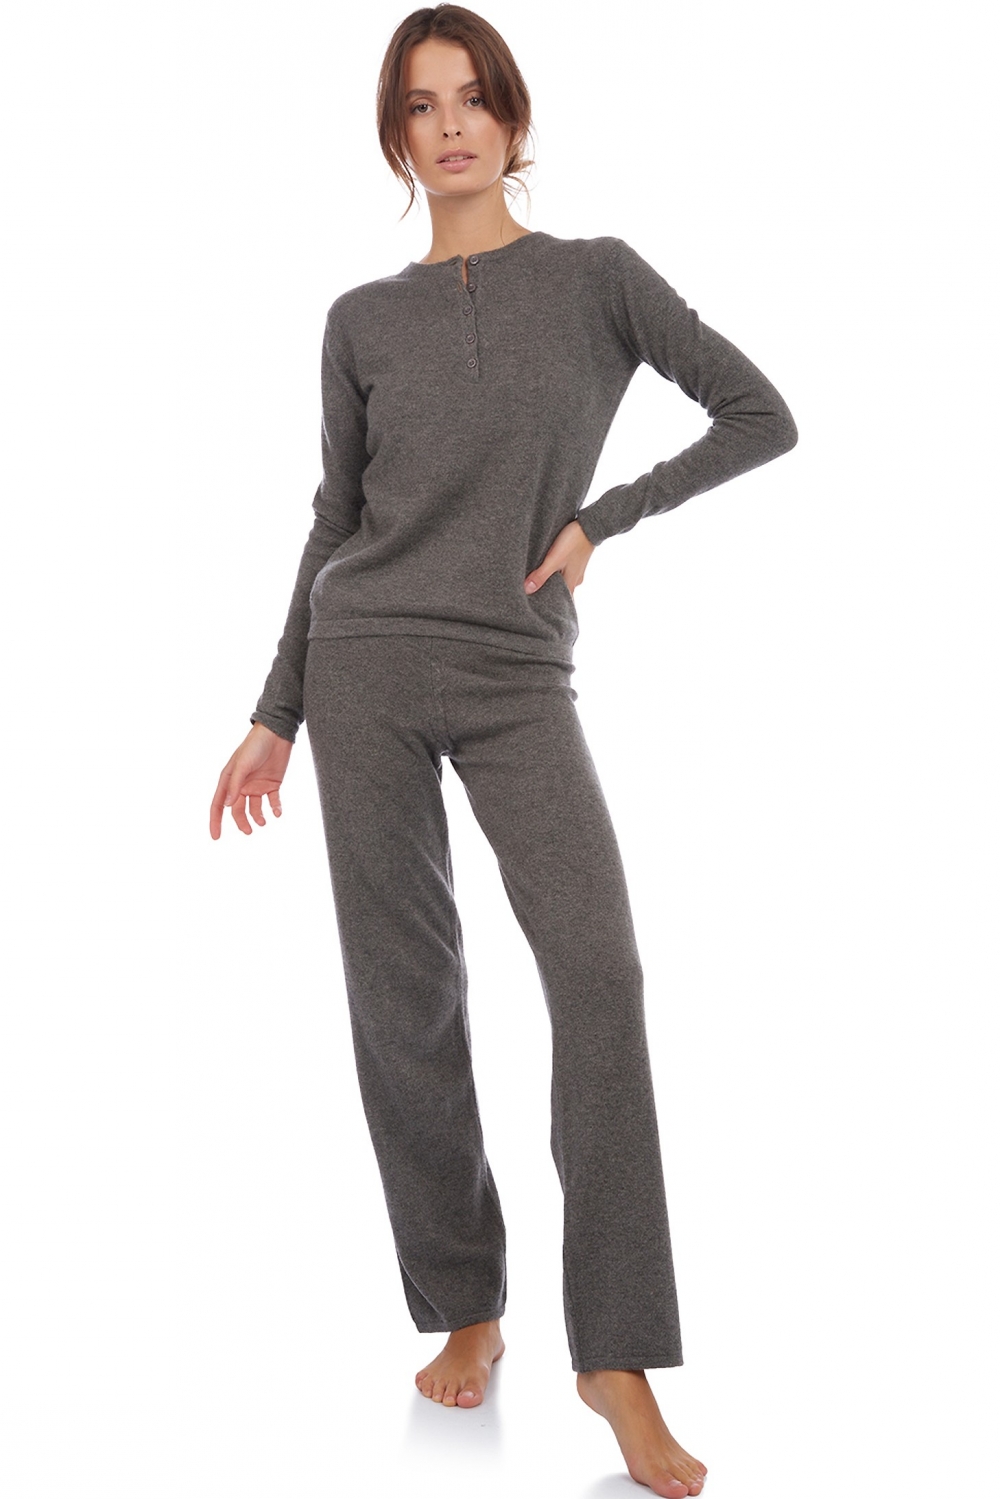 Cachemire pyjama femme loan gris chine 2xl